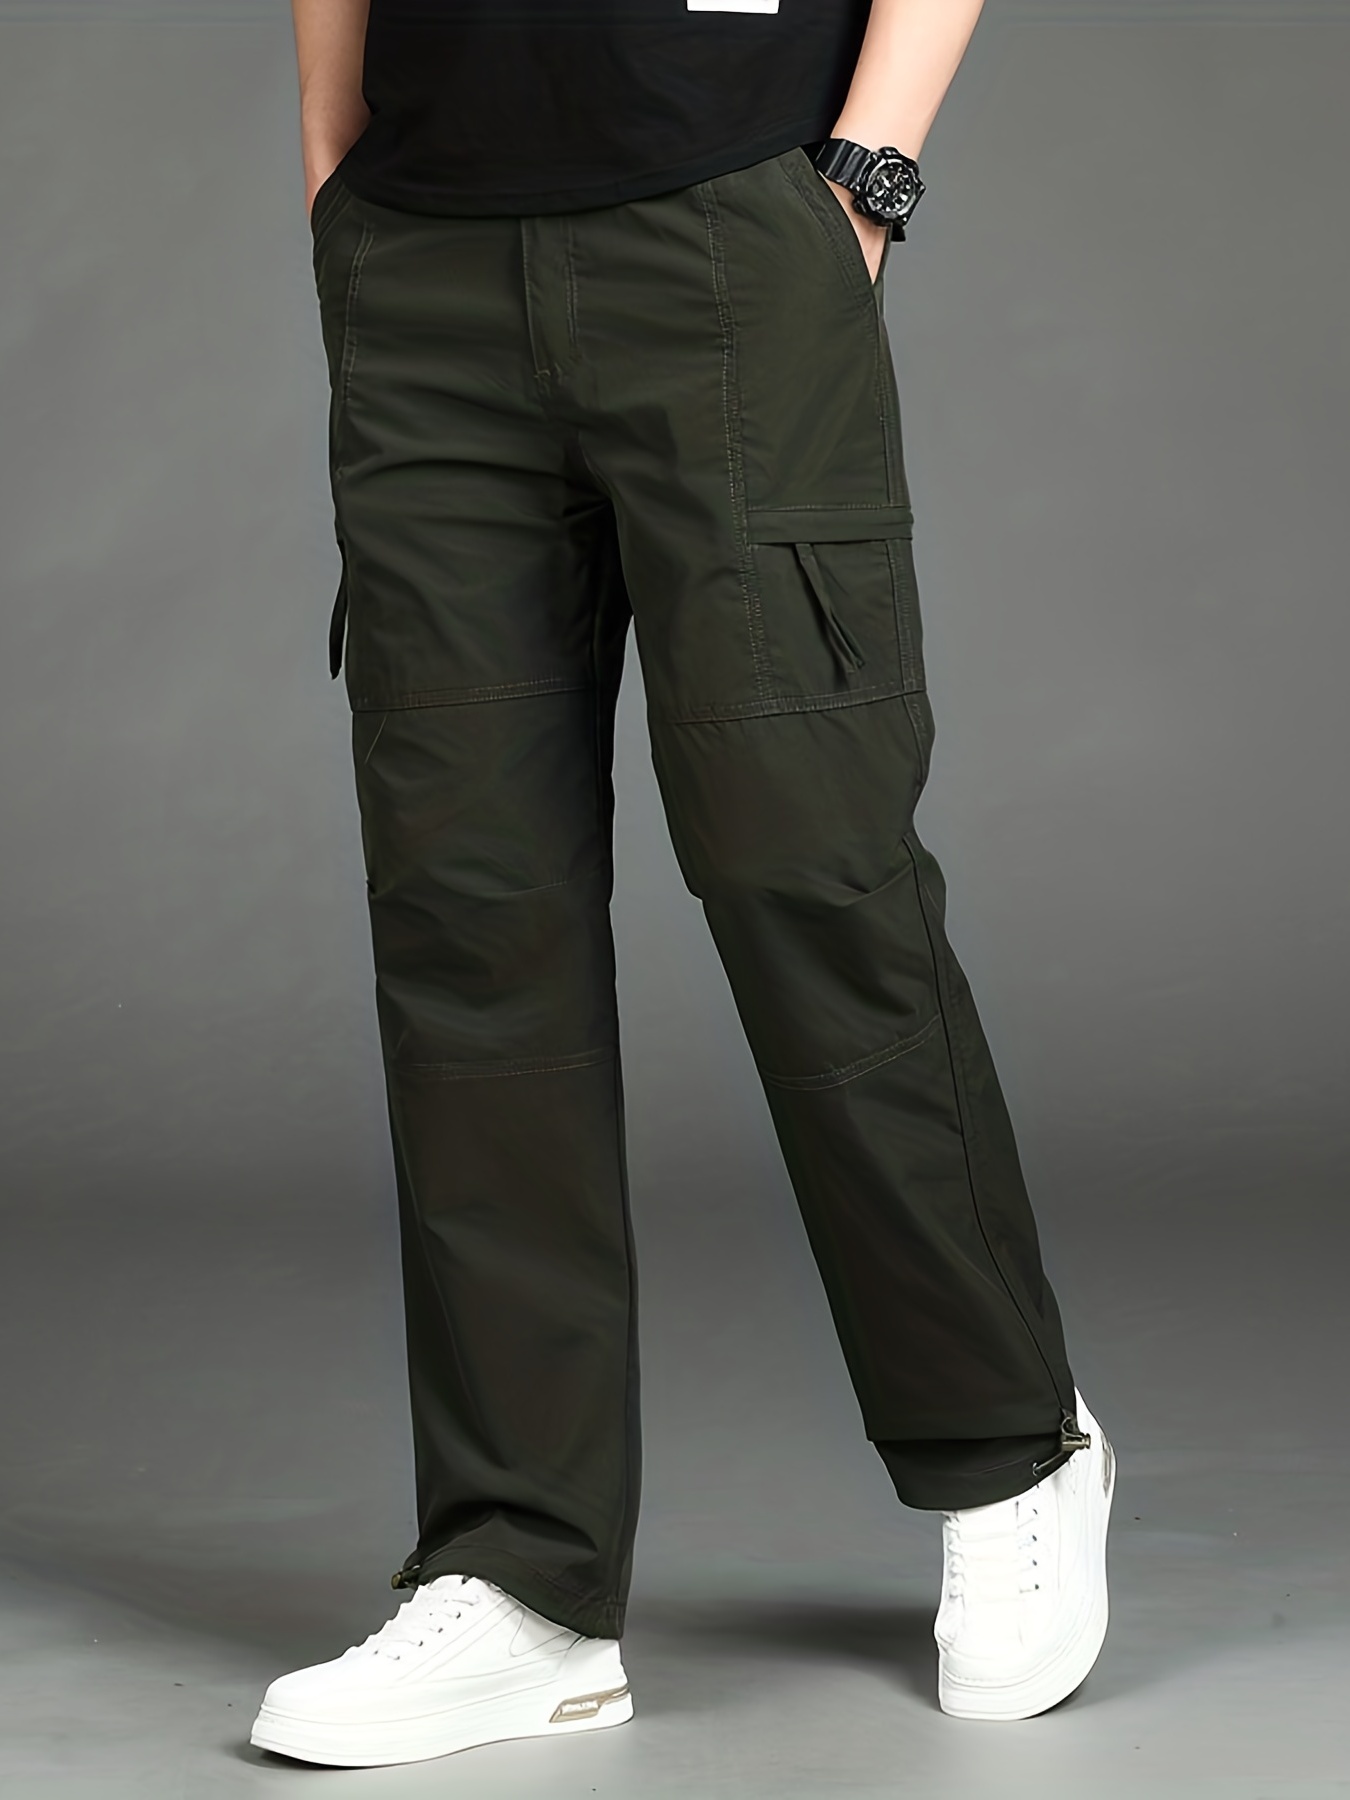 Men's Dark Green Athletic Water Resistant Pant